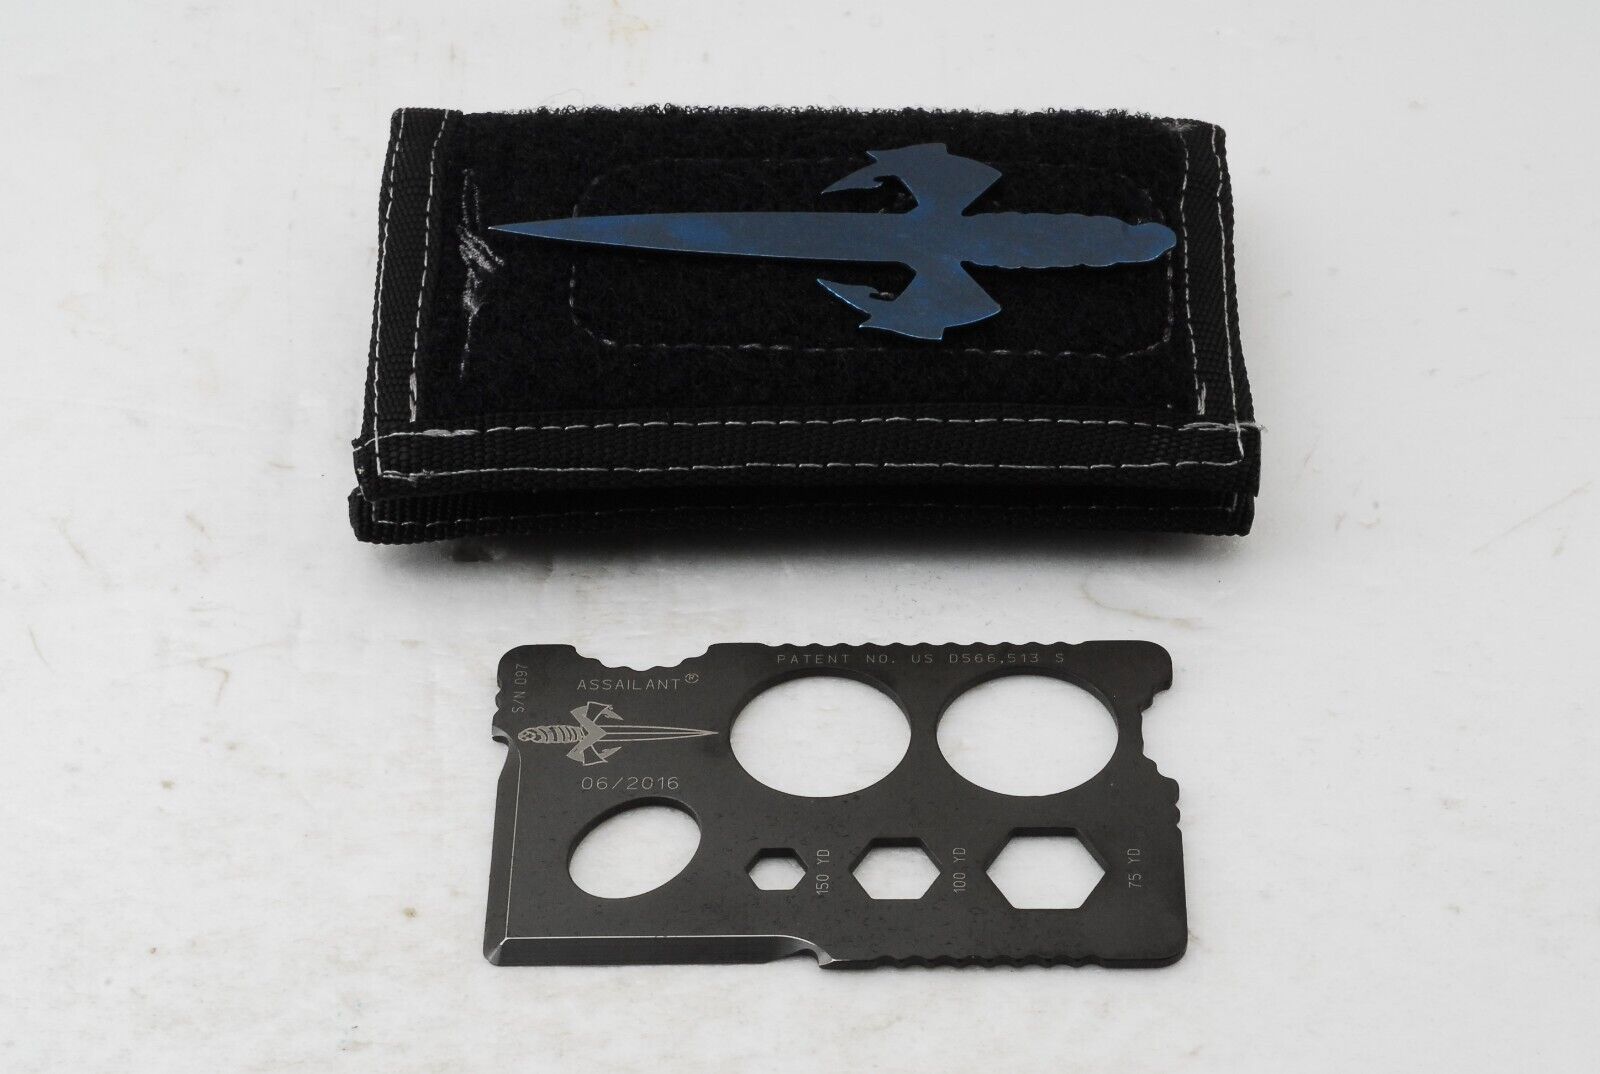 Marfione Custom Assailant Titanium Credit Card Knife 06/2016